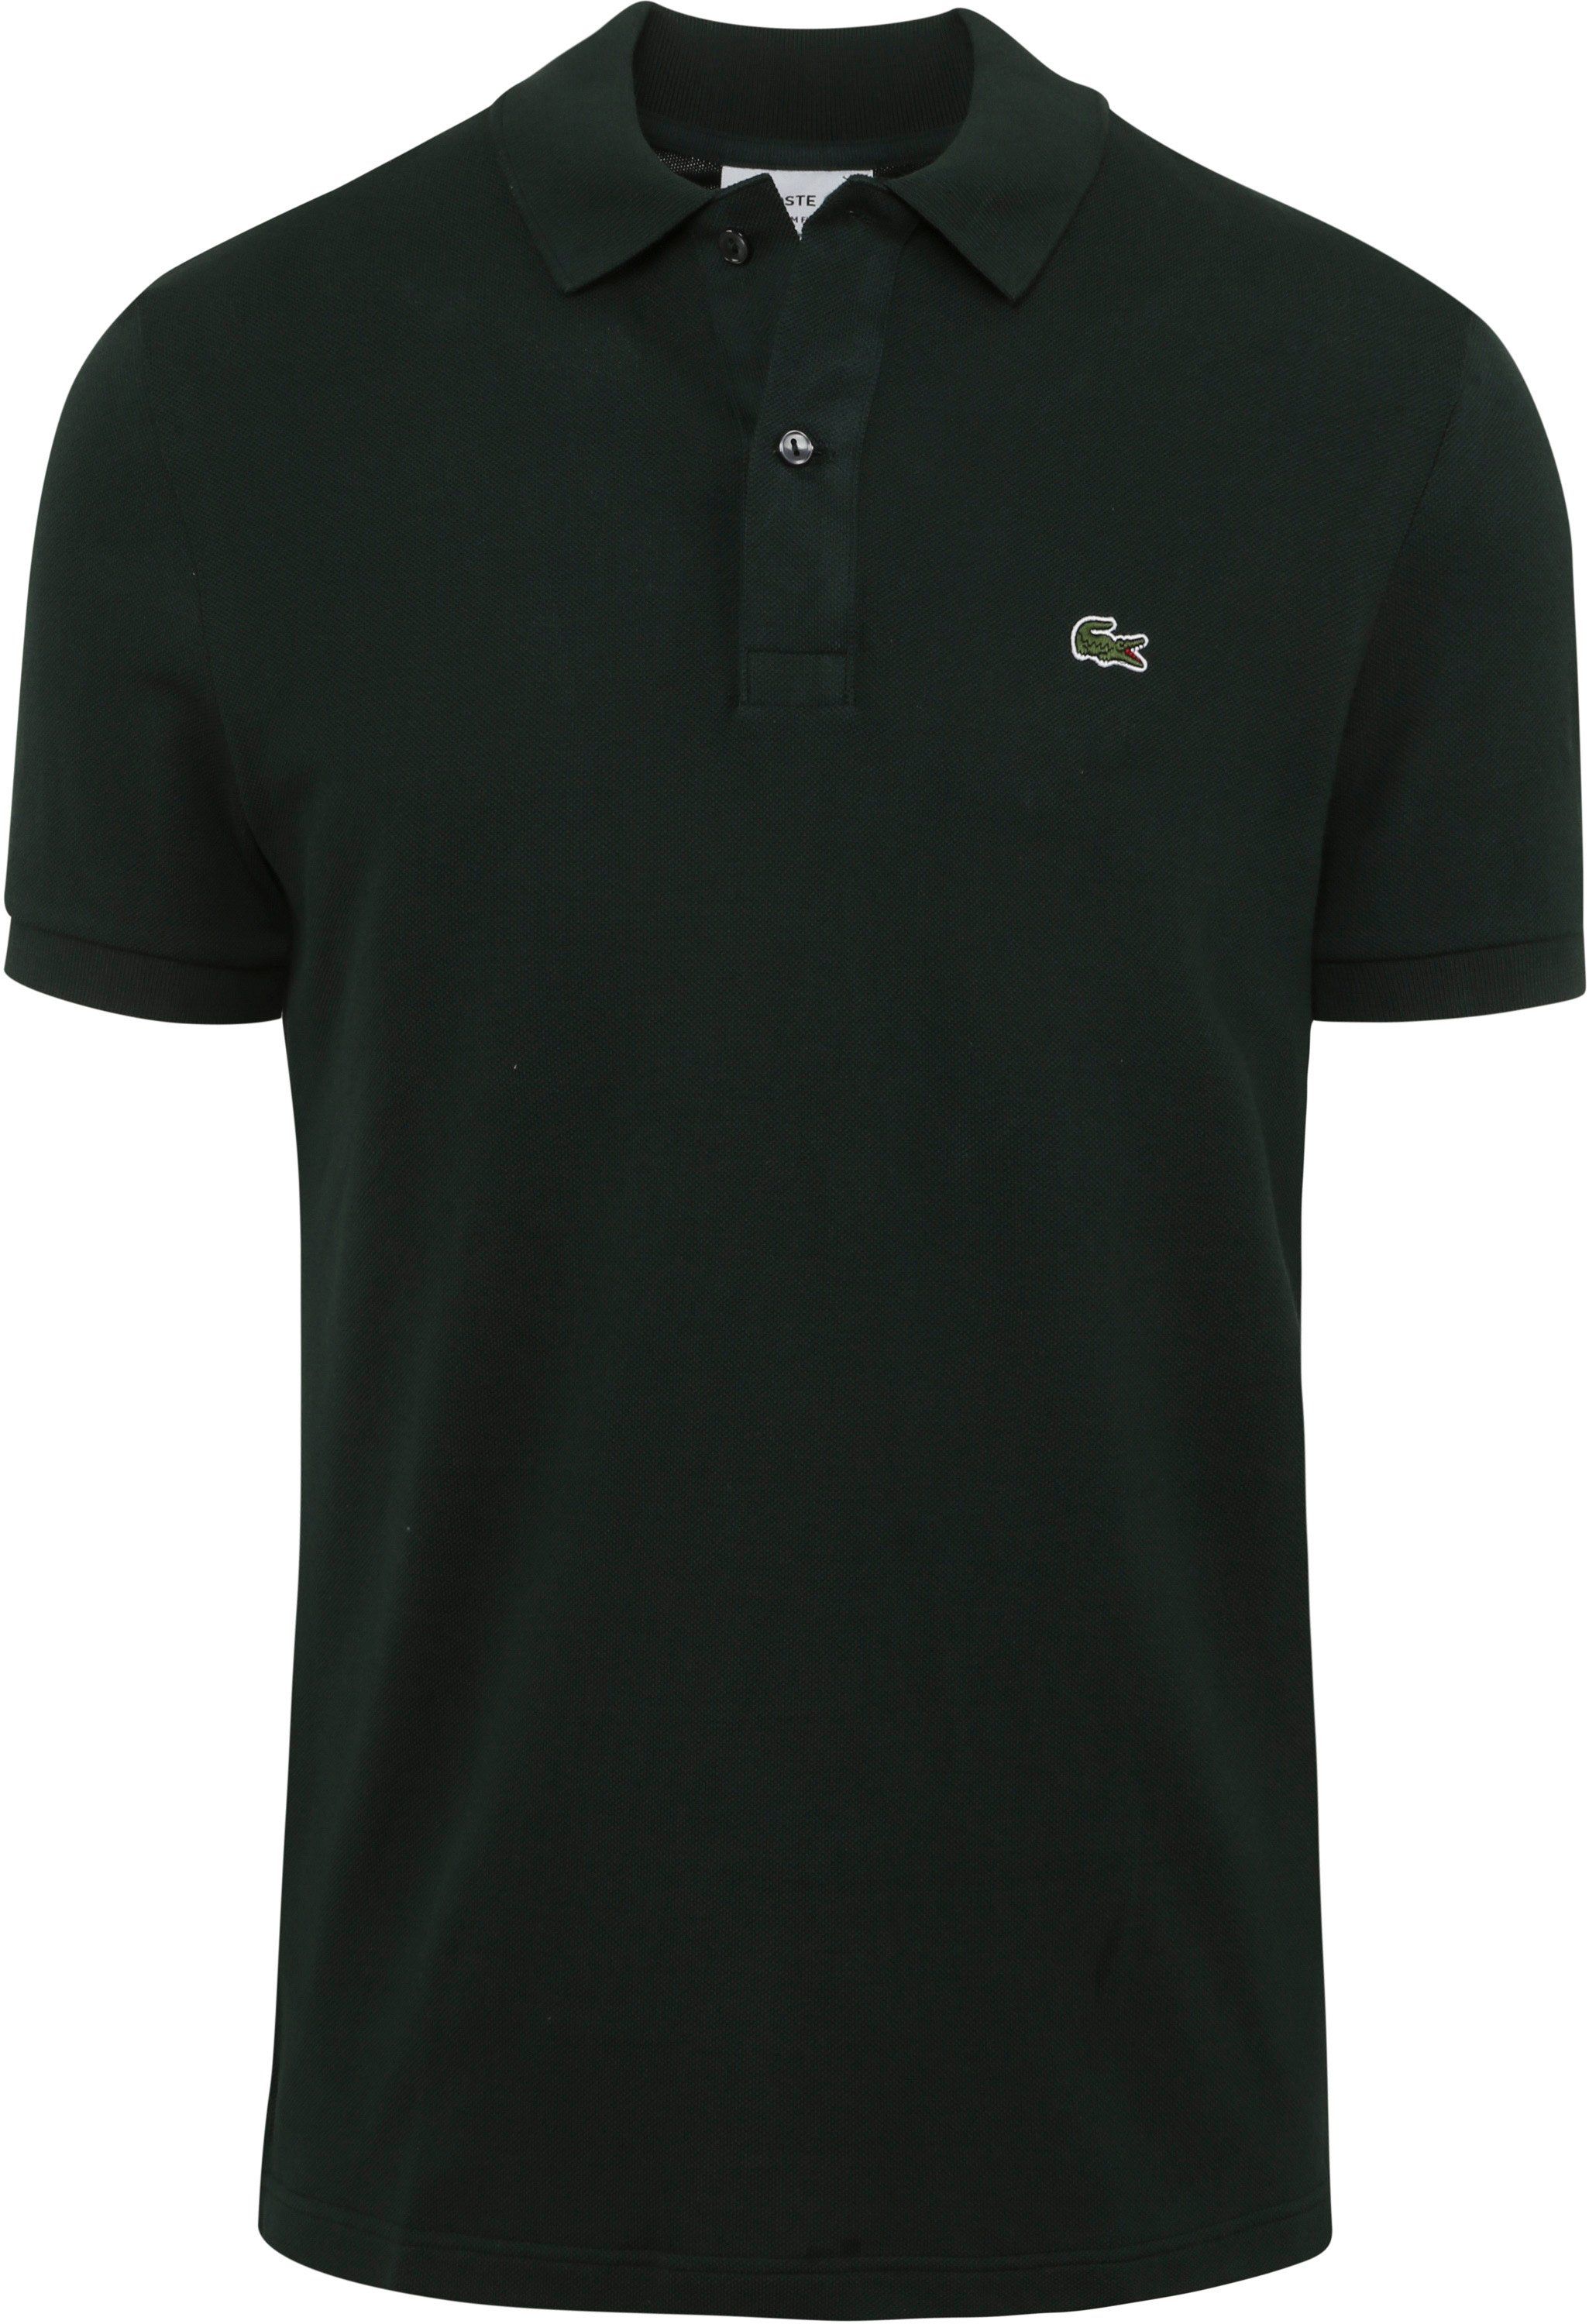 Lacoste Polo Shirt Dark Dark Green Green size 3XL